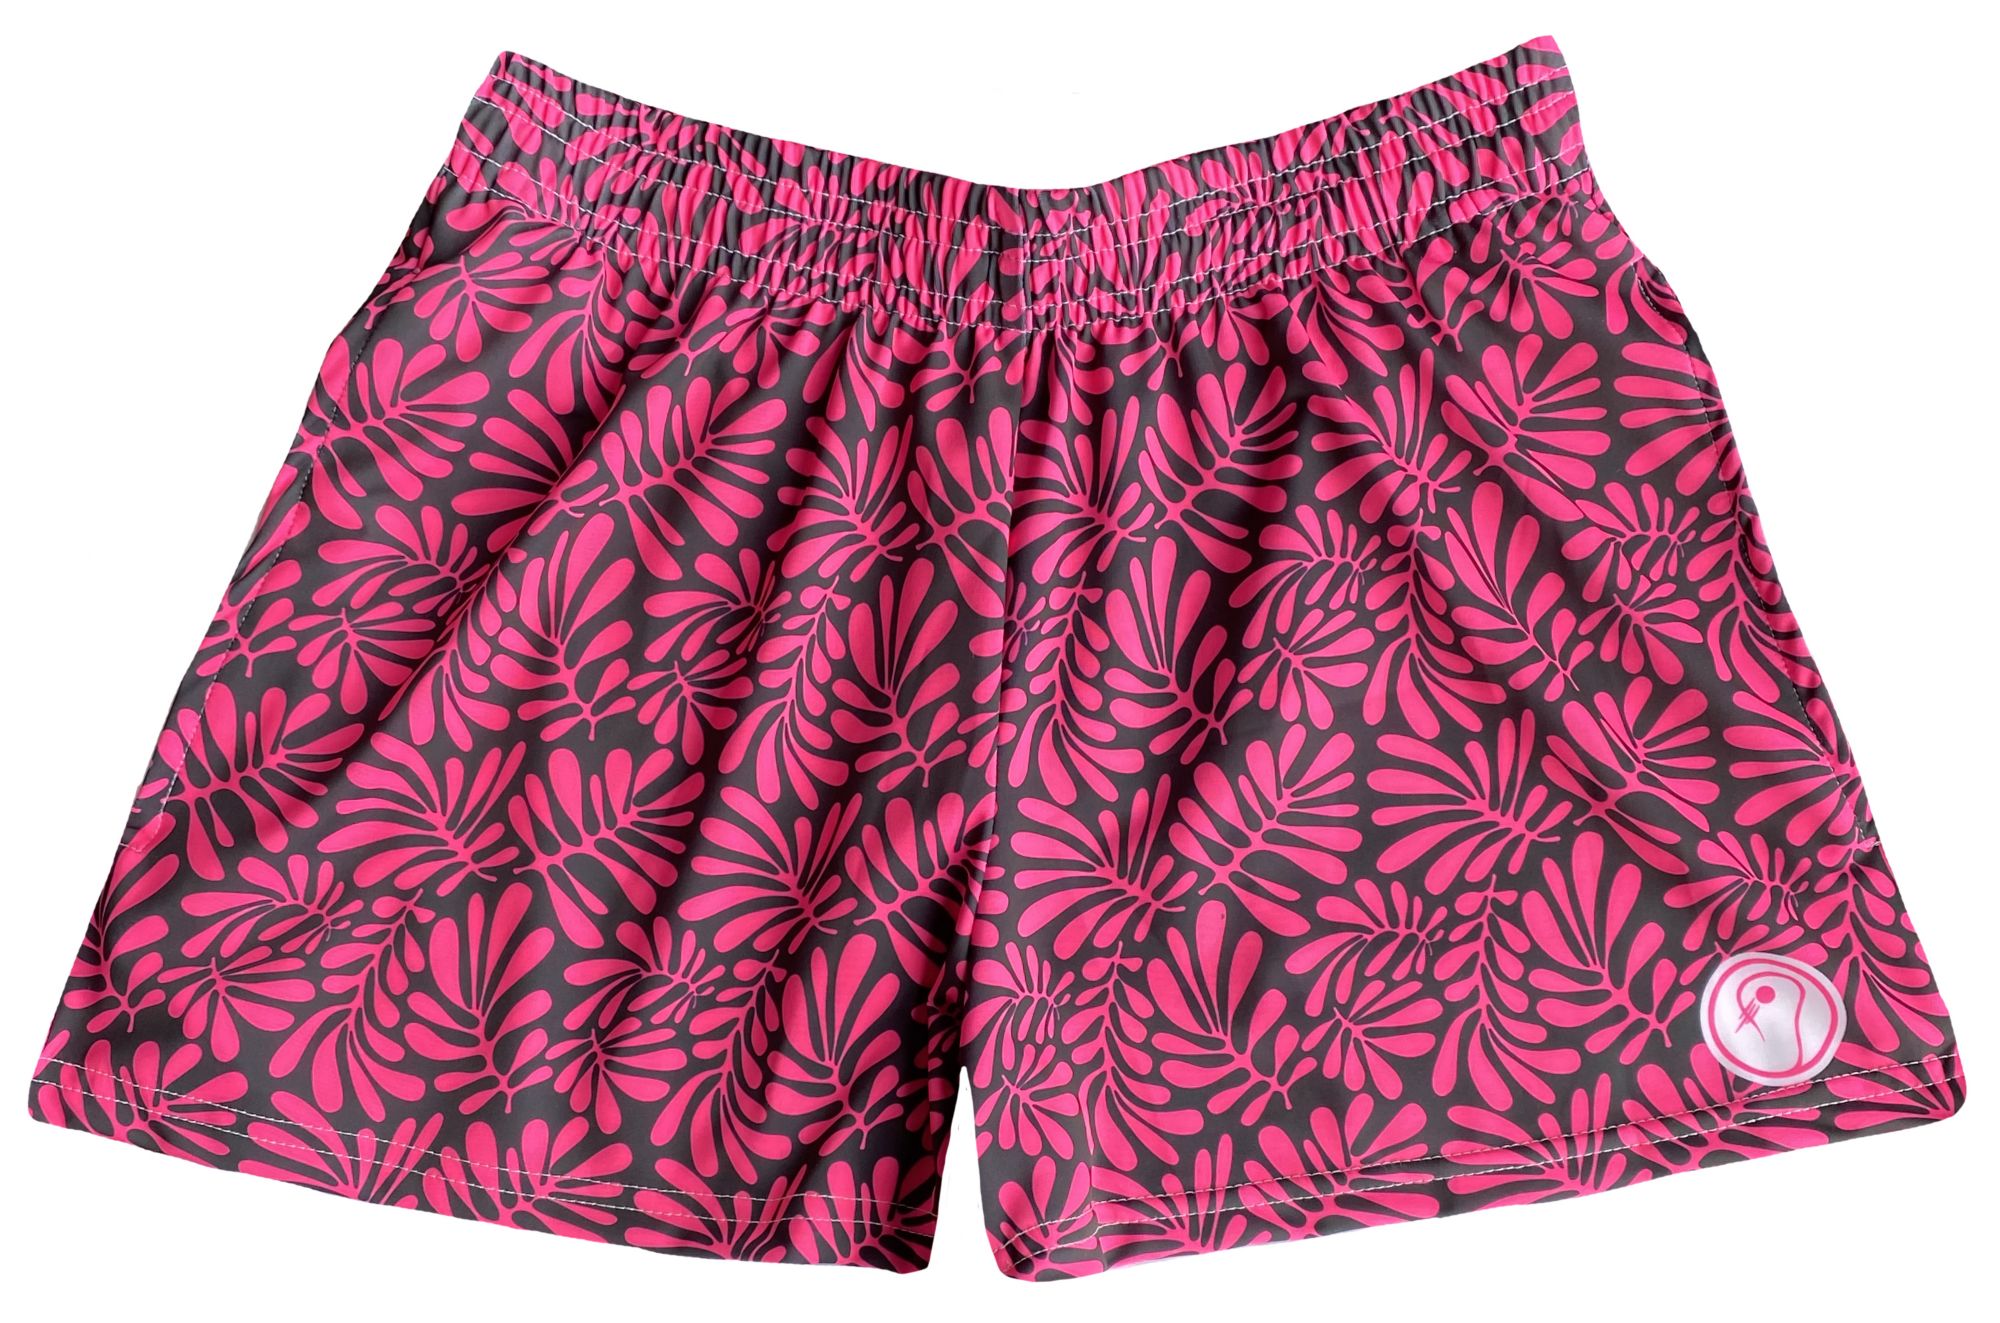 LAX SO HARD Women's Tropical Performance Lacrosse Shorts